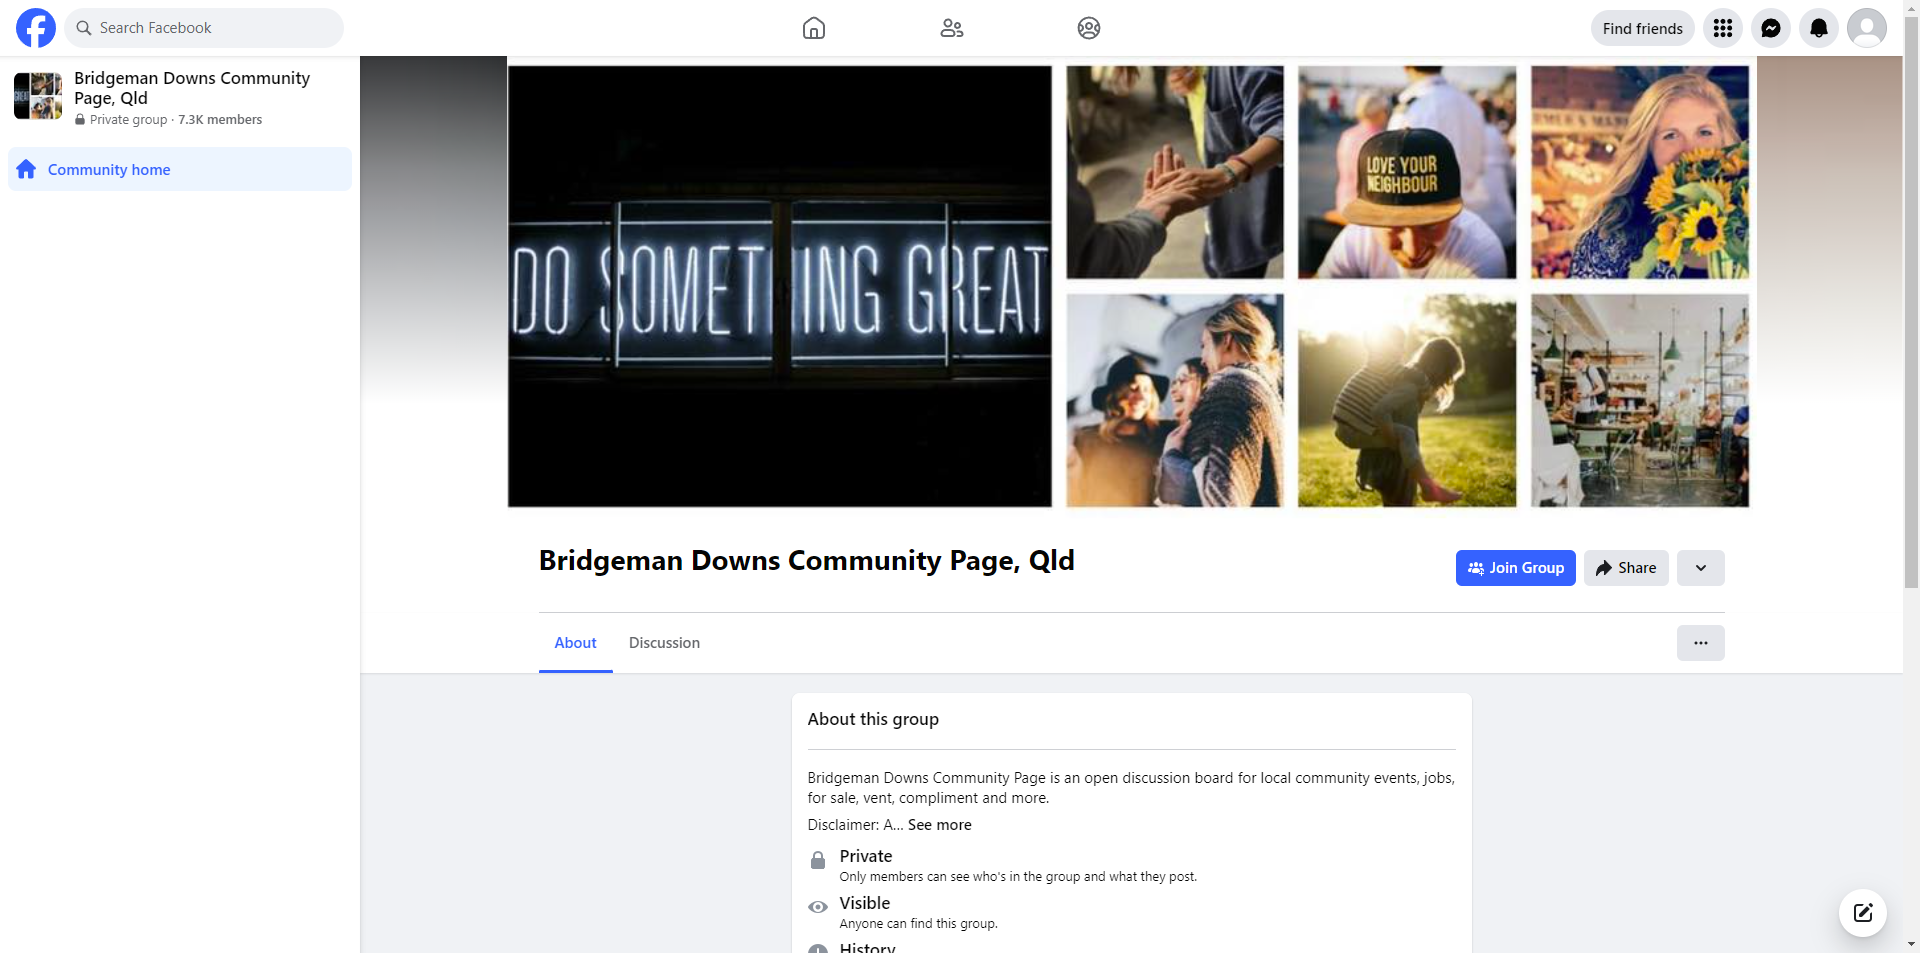 Bridgeman Downs Community Page, Qld